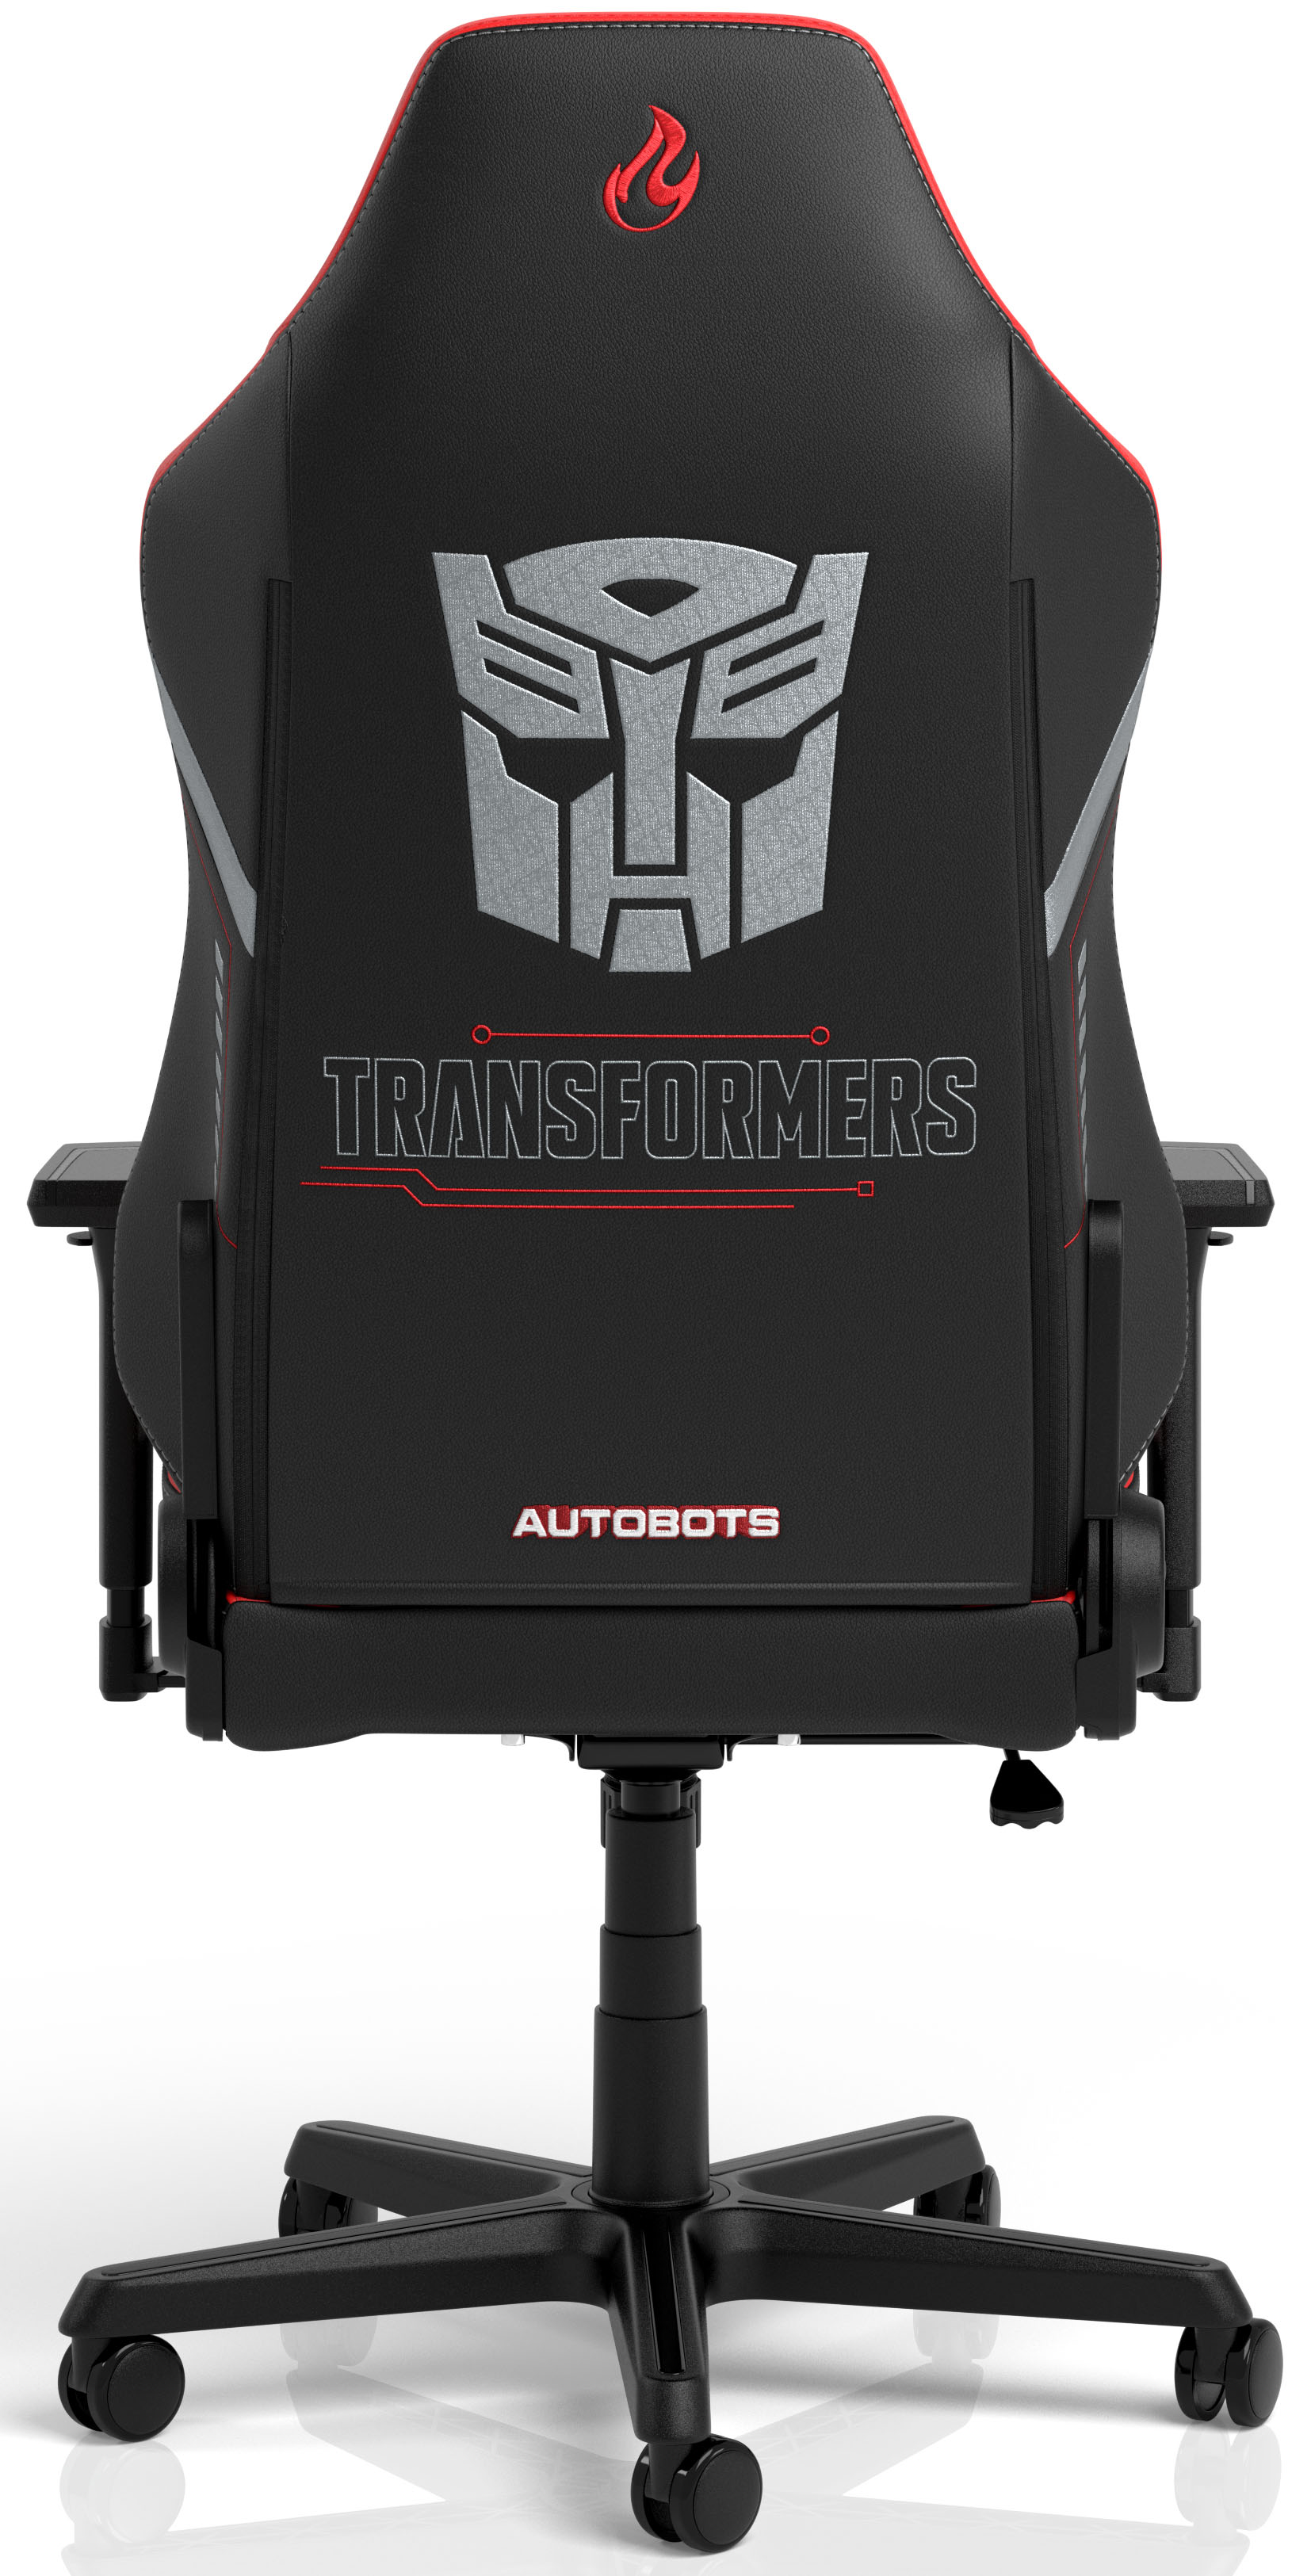 Nitro Concepts - Cadeira Nitro Concepts X1000 Gaming - Transformers Autobots Edition